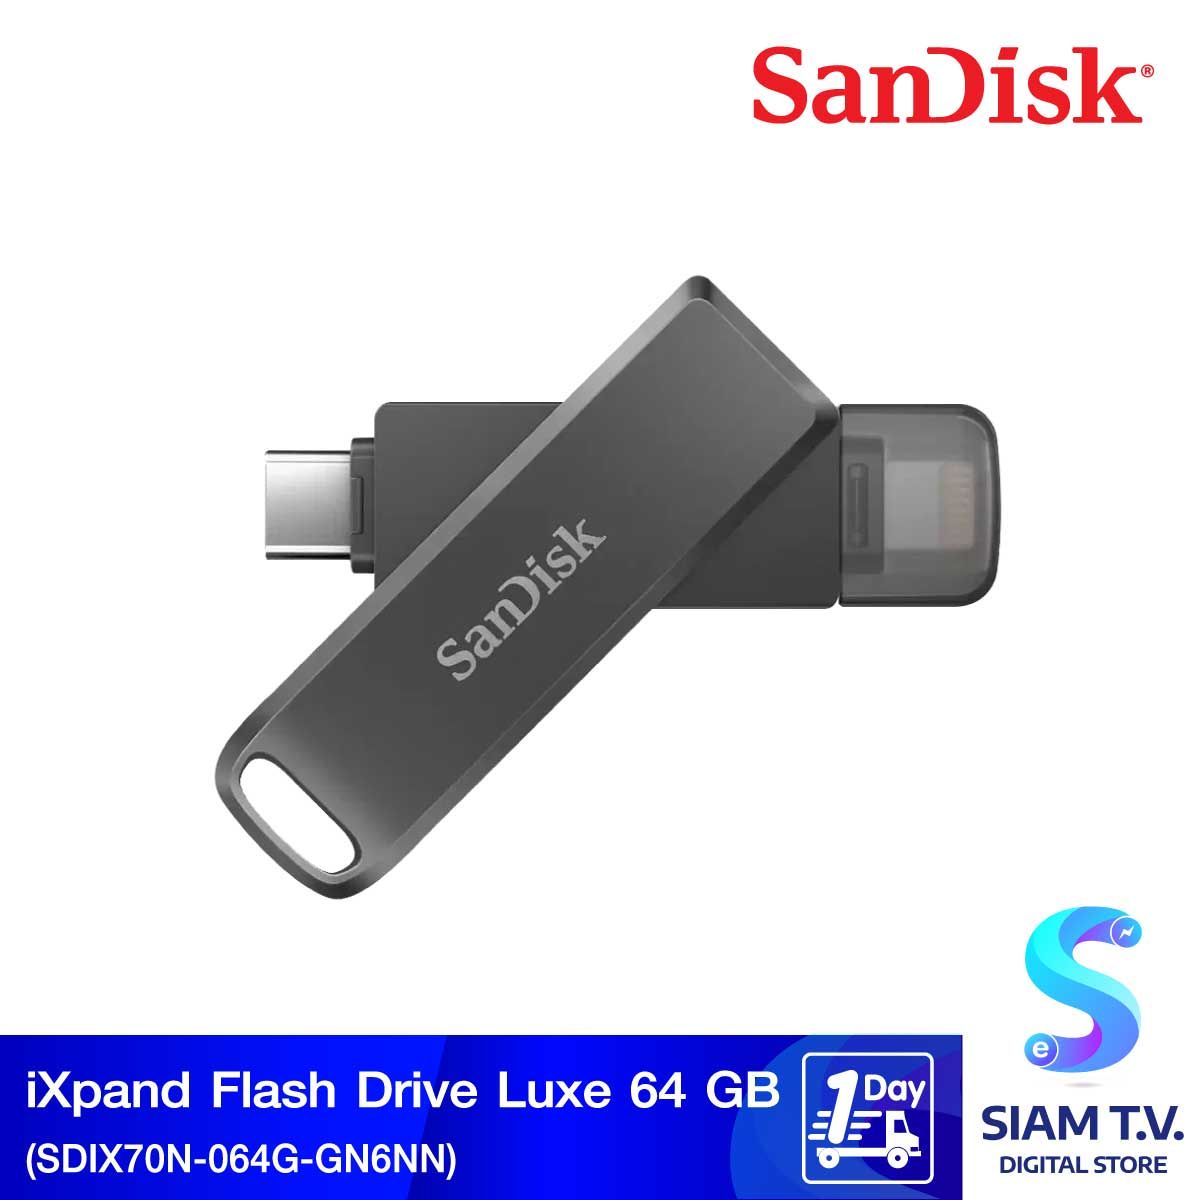 FLASH DRIVE (แฟลชไดร์ฟ) 64 GB  SANDISK IXPAND FLASH DRIVE LUXE (SDIX70N-064G-GN6NN)